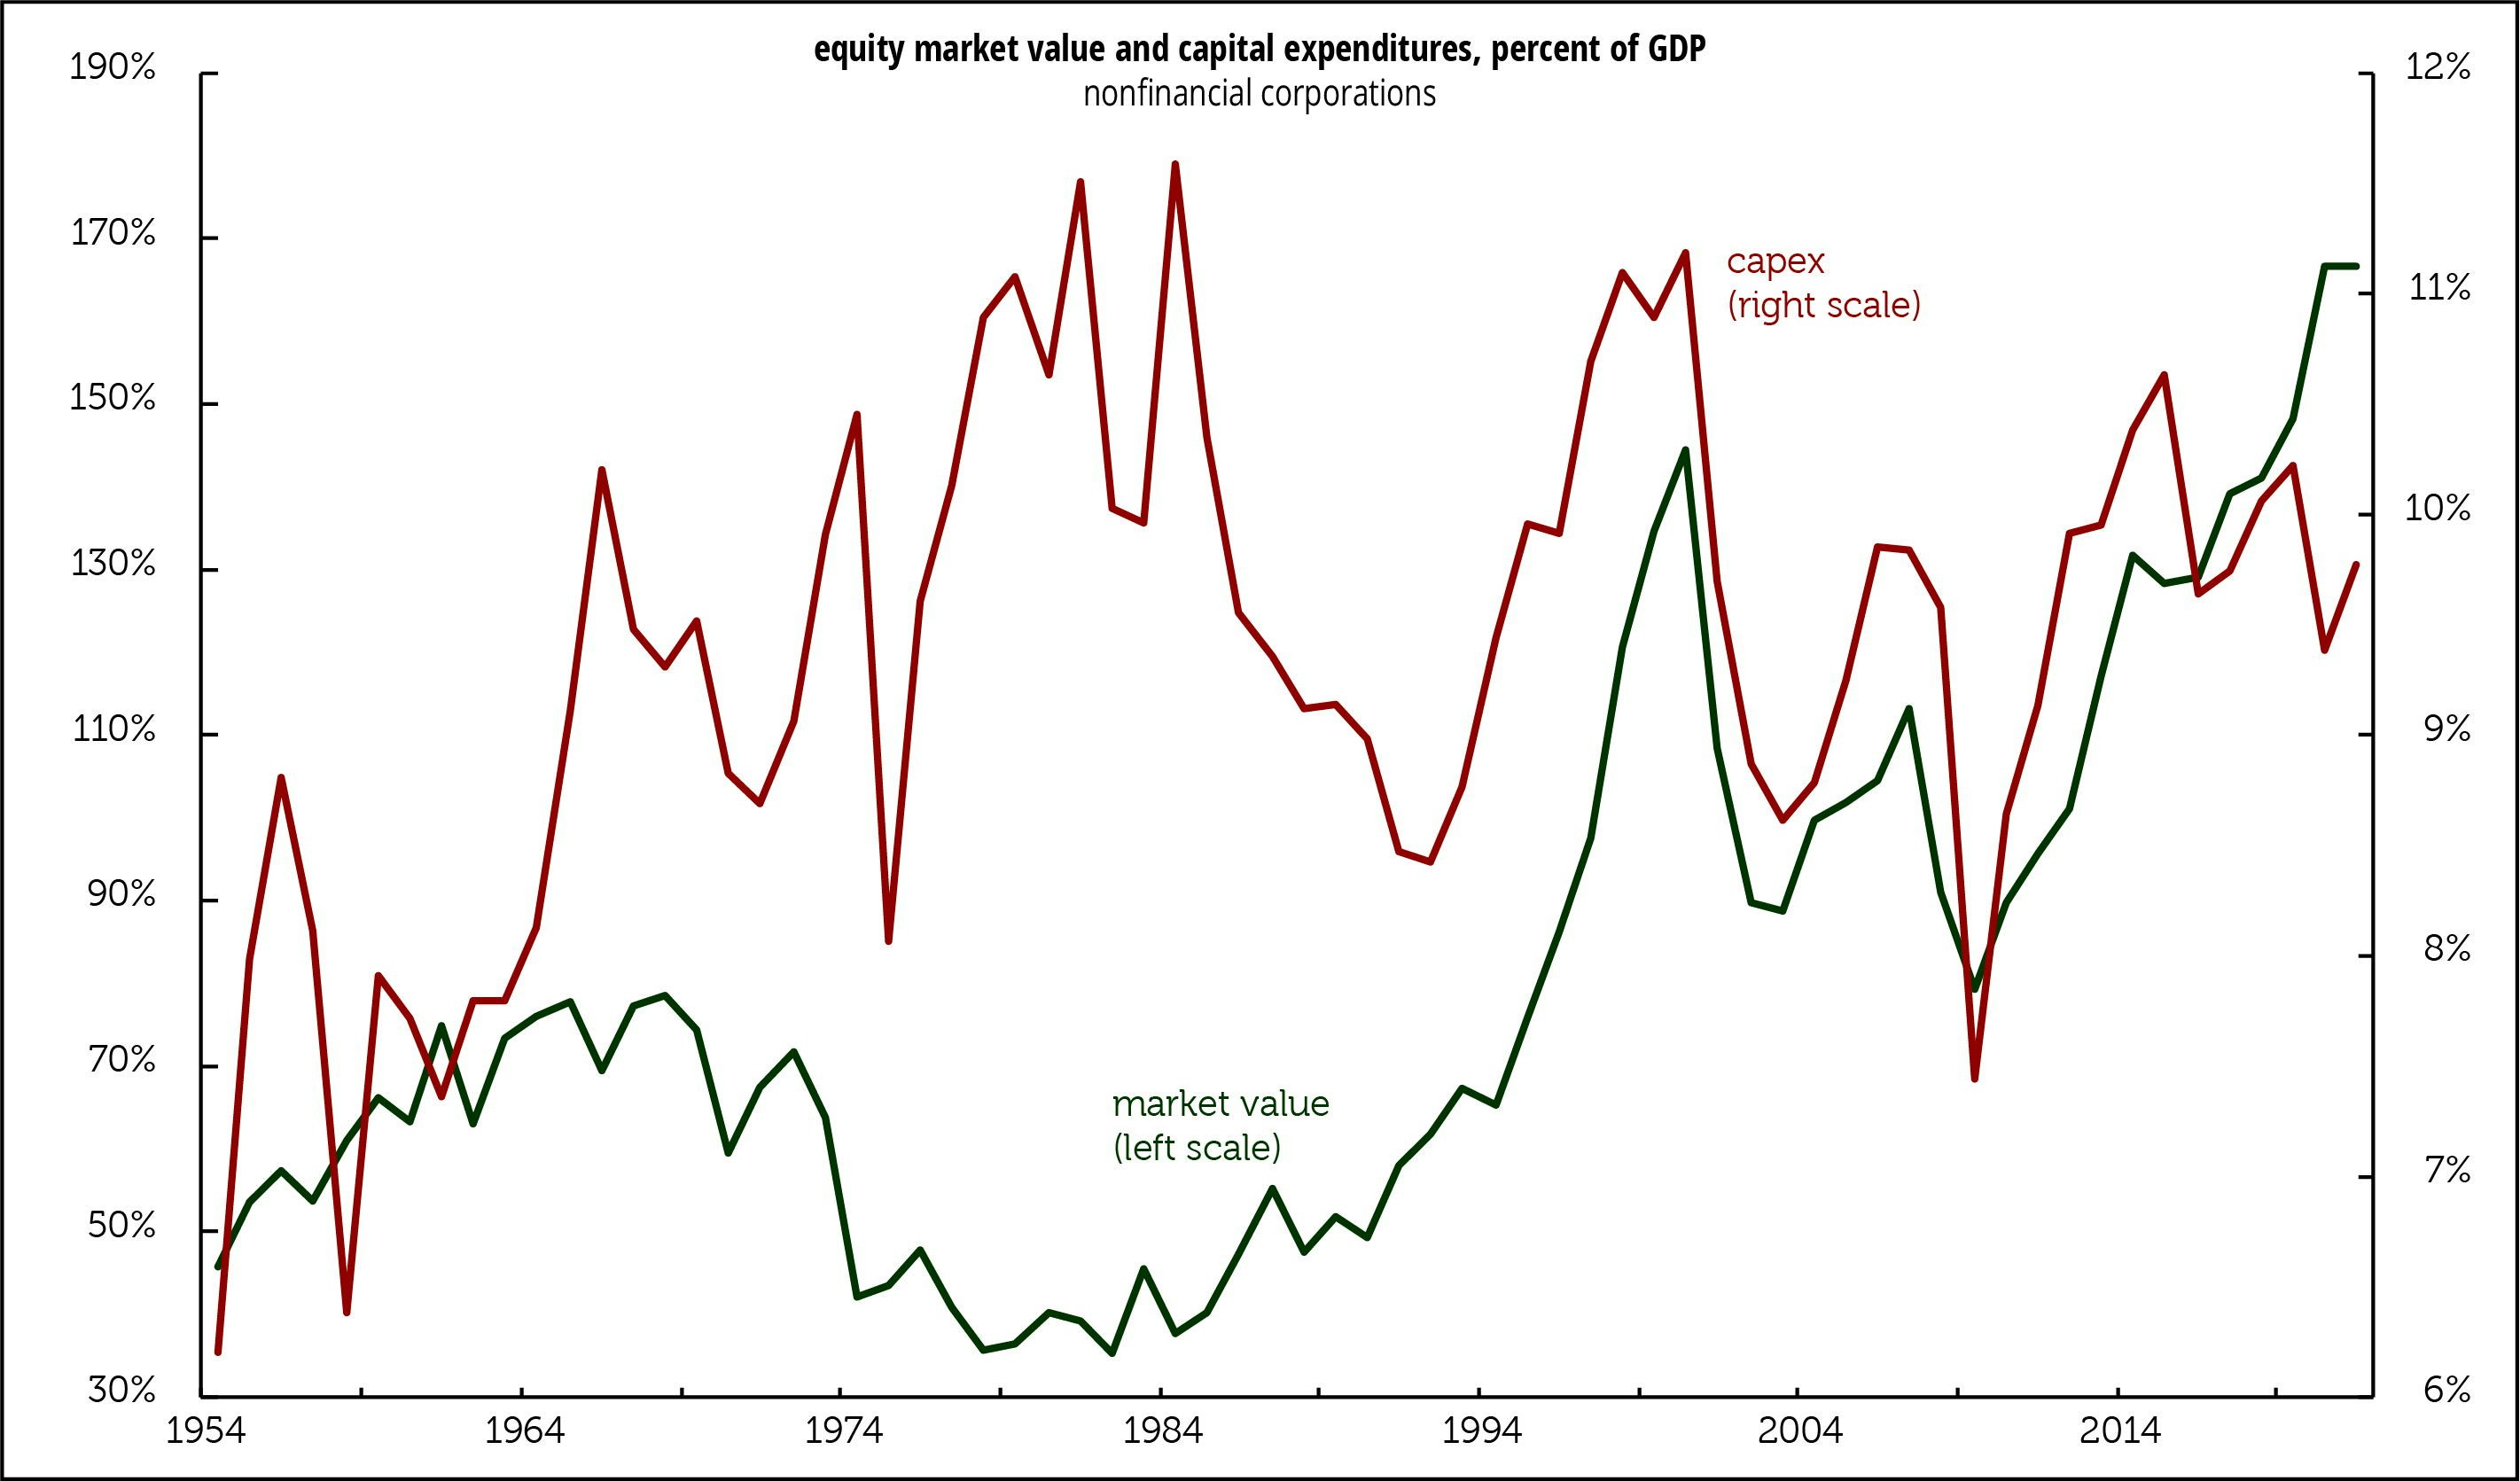 equity market value vs. capex